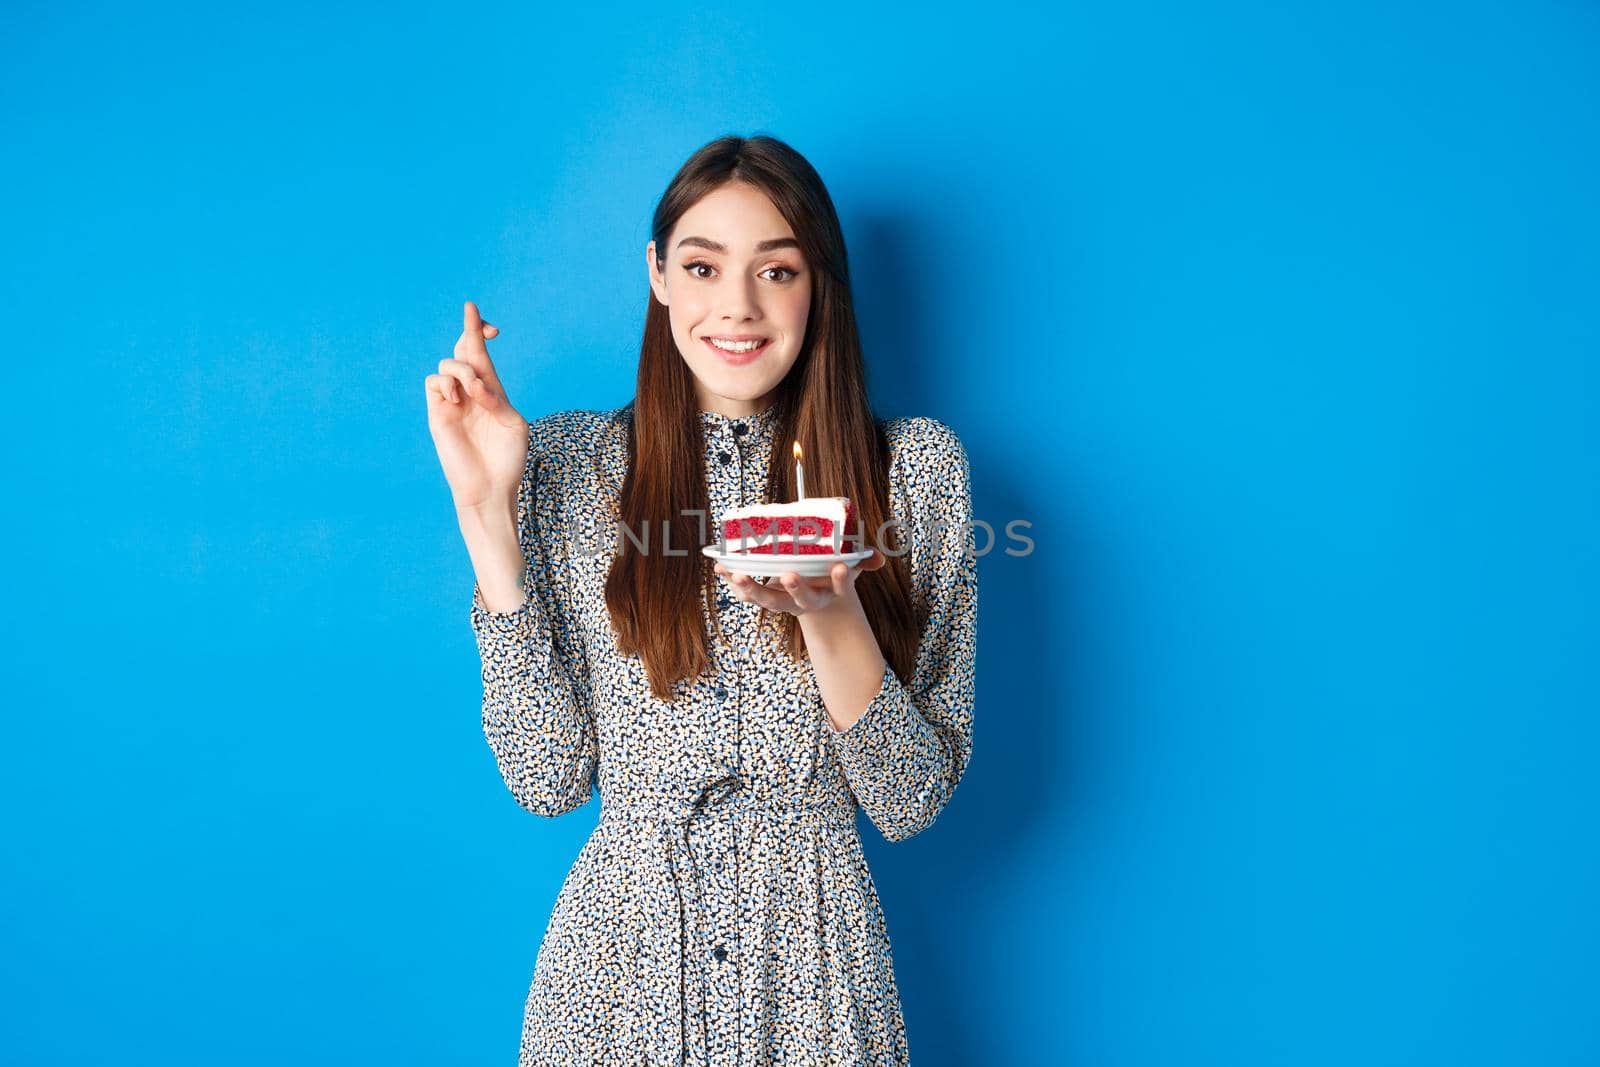 Hopeful birthday girl making wish on cake, cross fingers for good luck, standing in stylish dress against blue background.